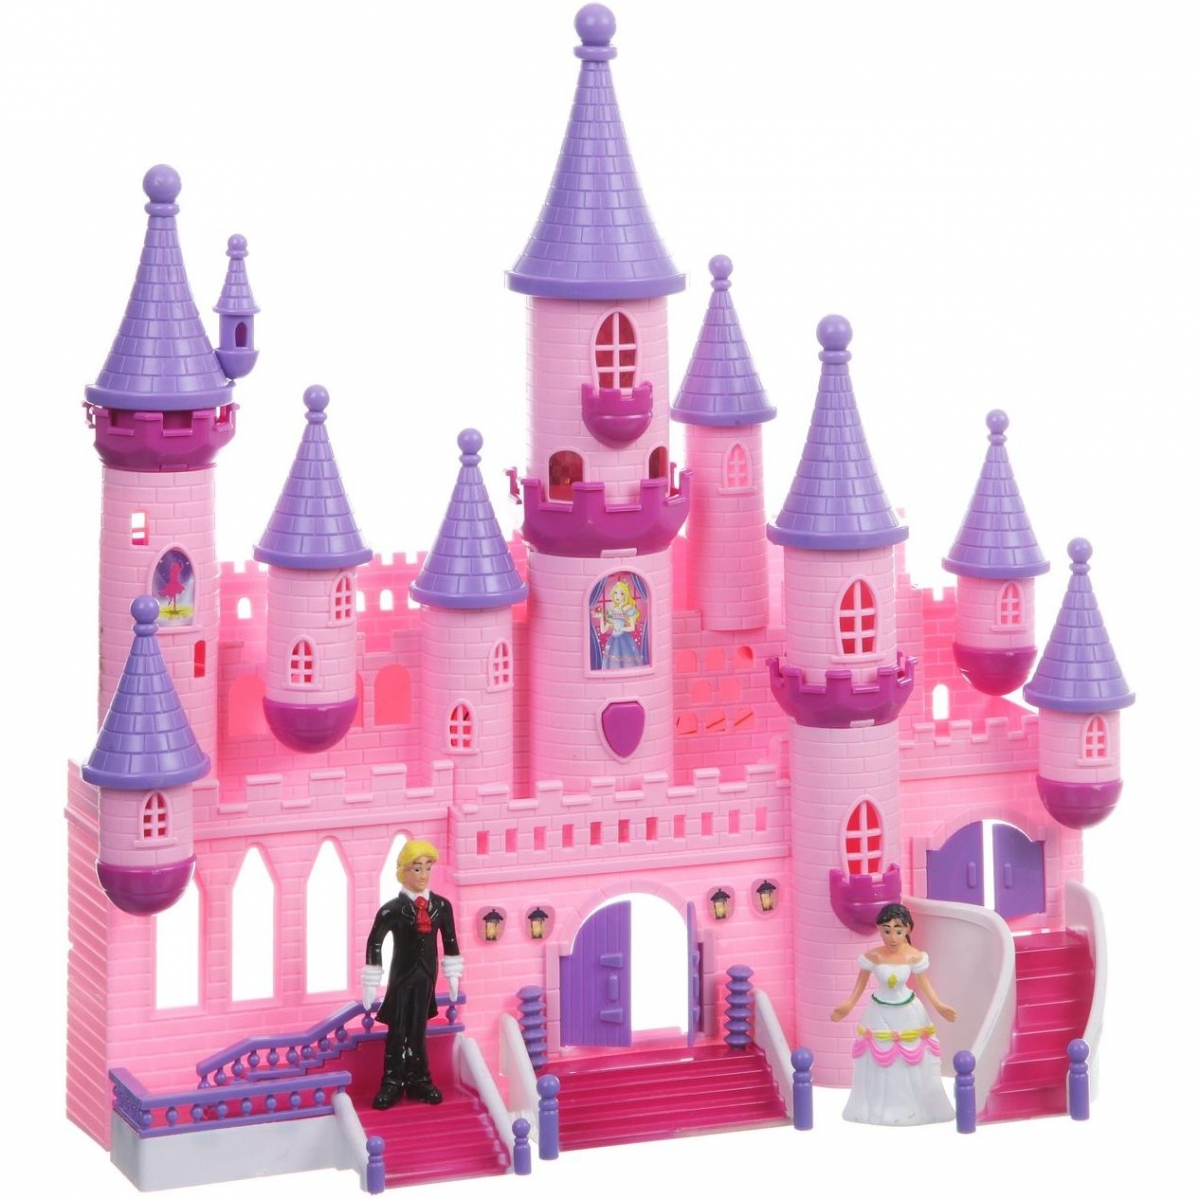    Shenzhen Toys My Dream Castle - 